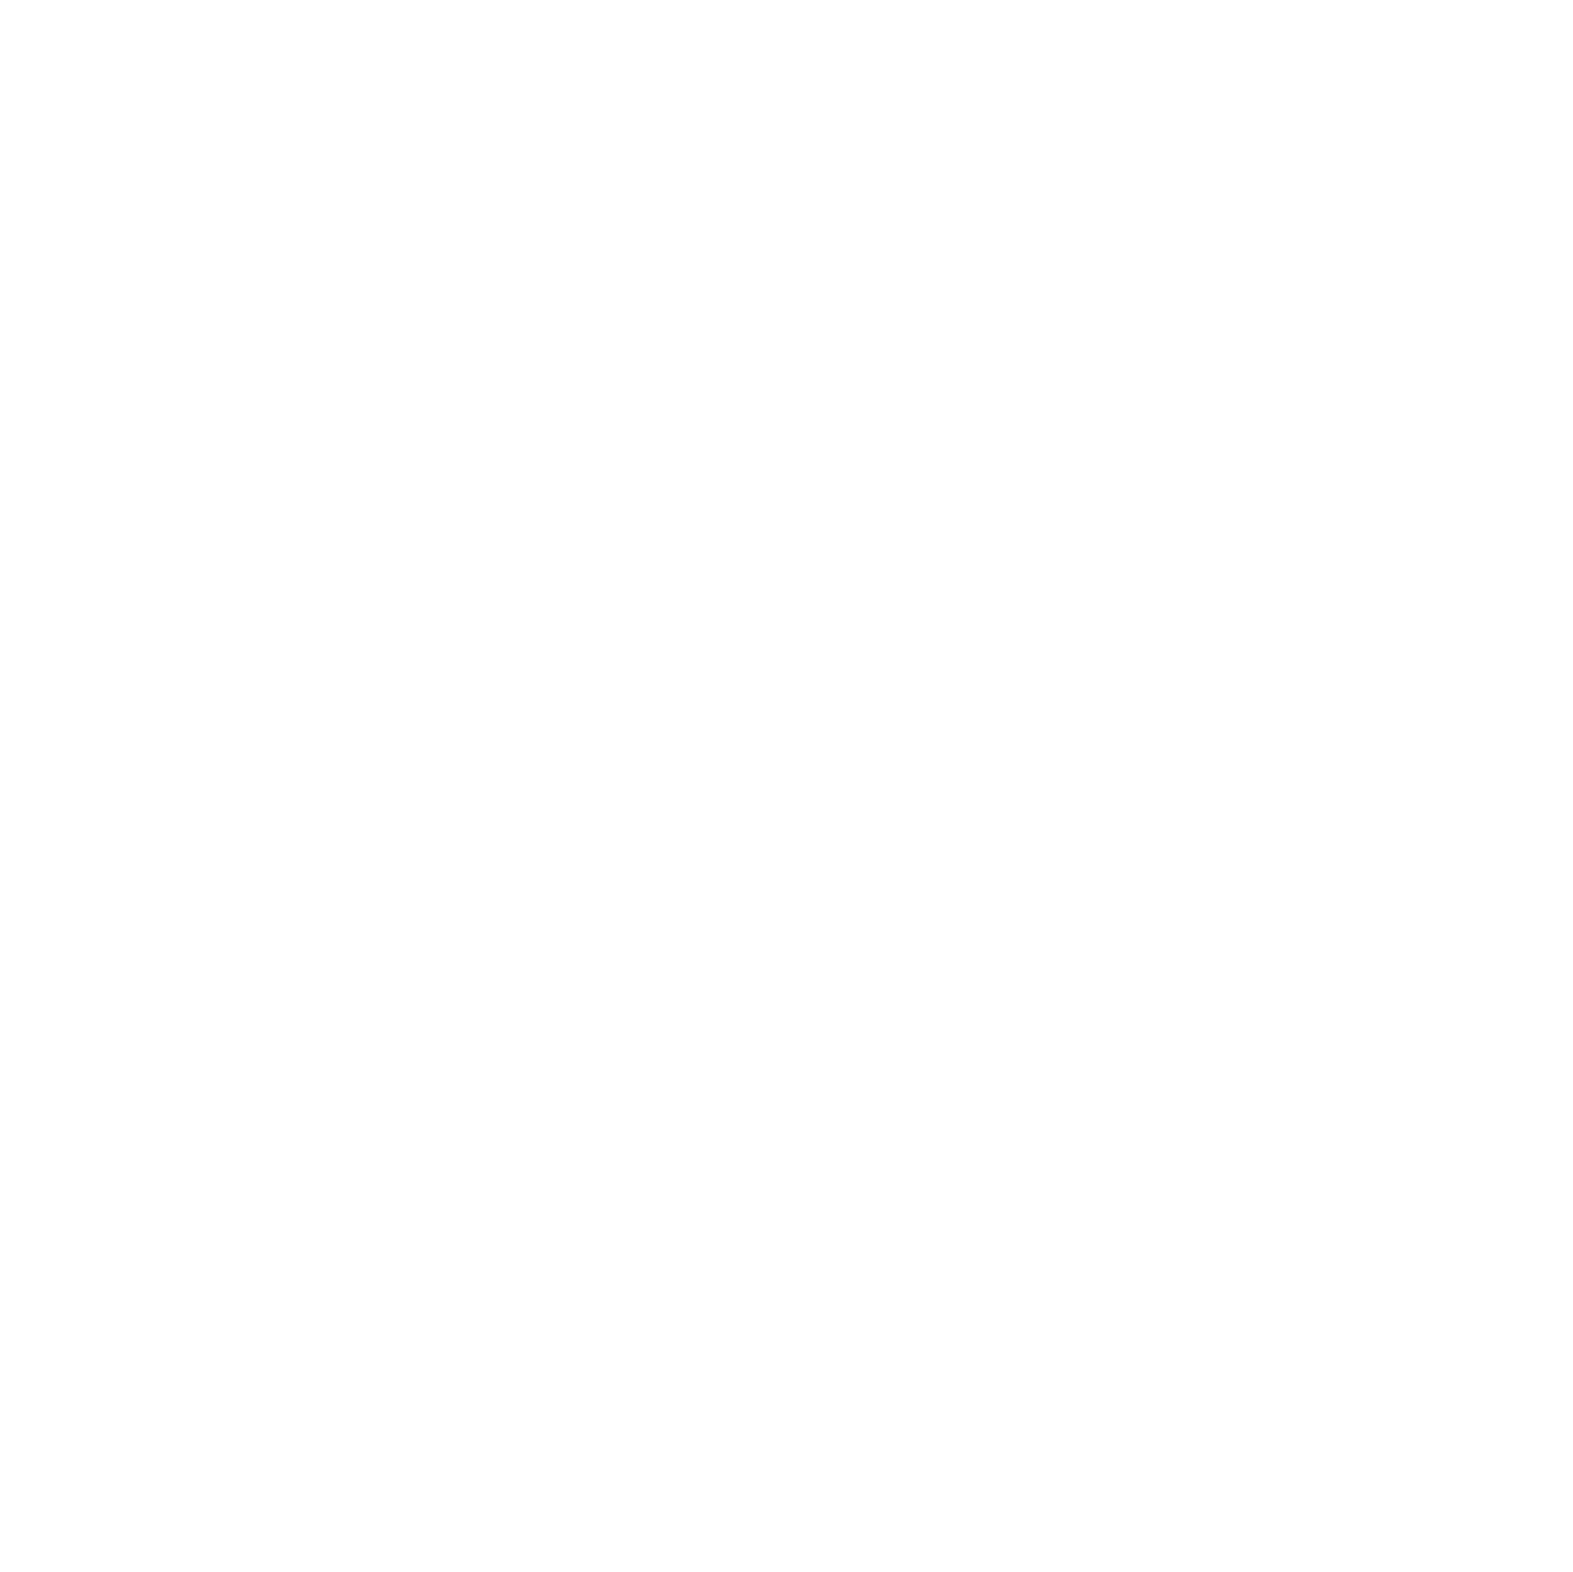 Biodesix logo for dark backgrounds (transparent PNG)